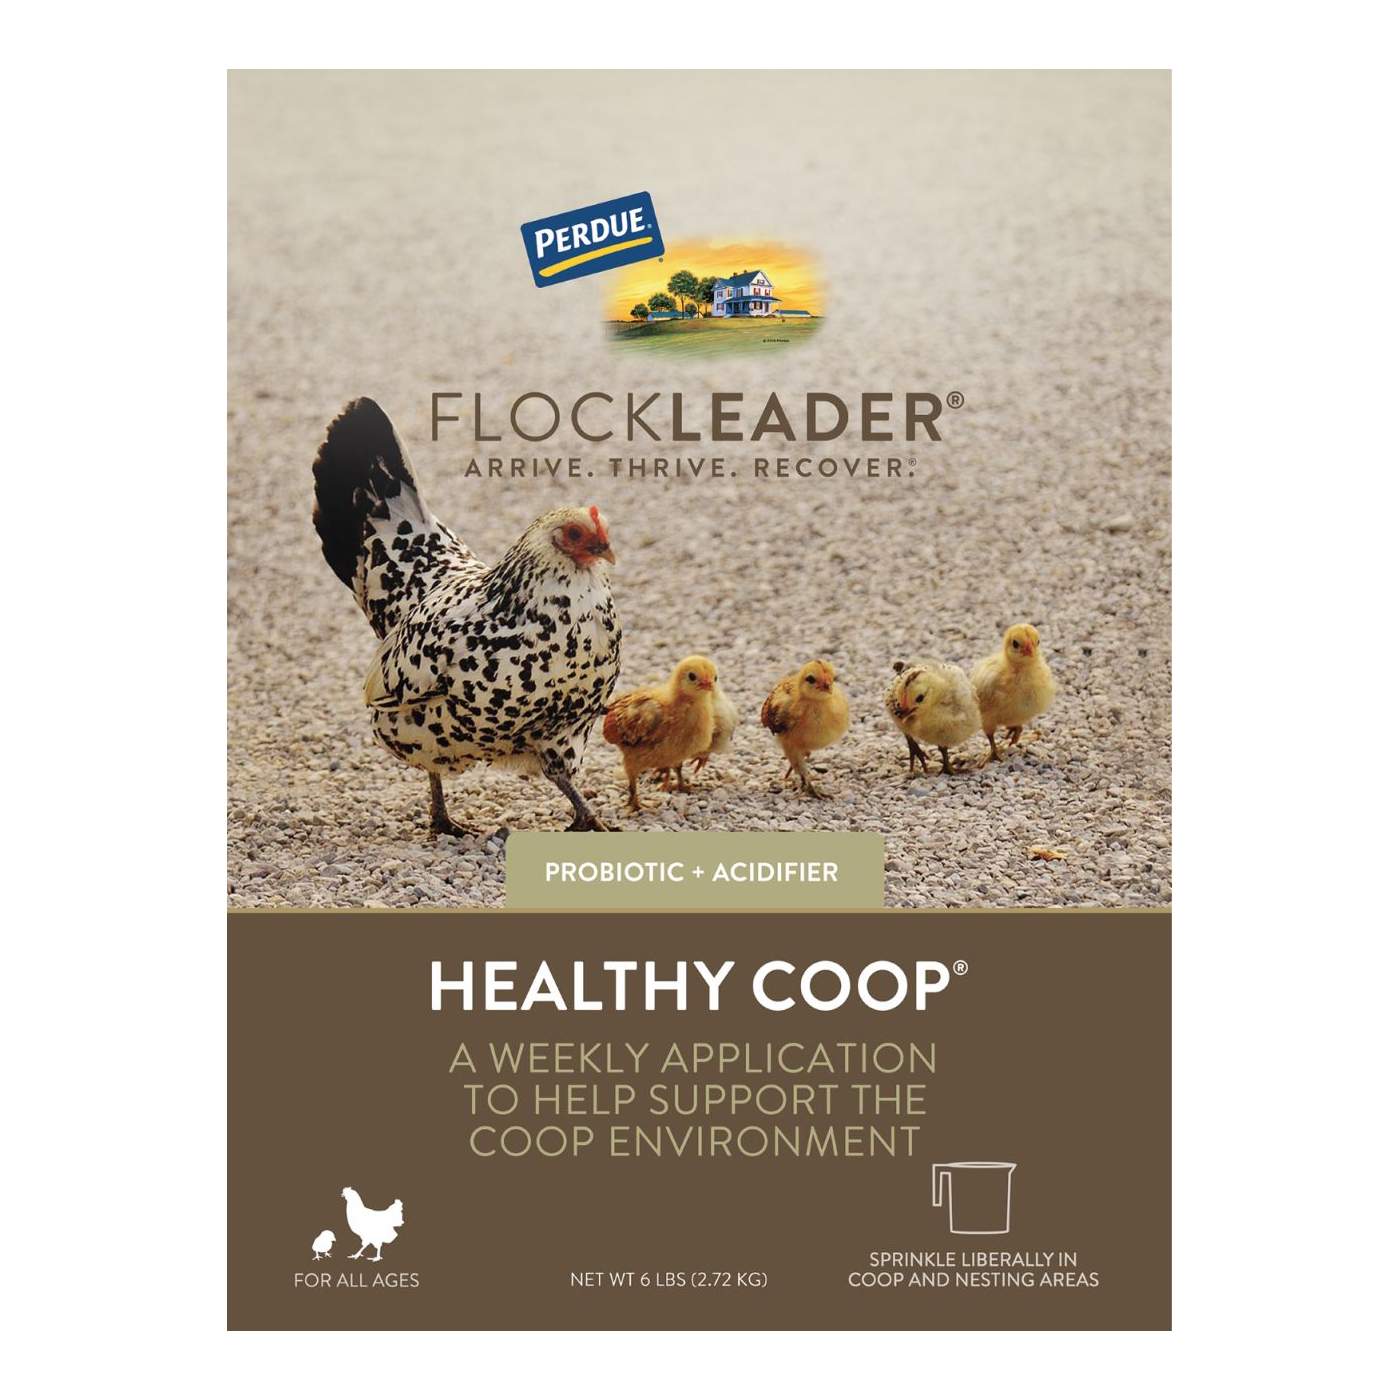 Flockleader Healthy Coop Poultry Food; image 1 of 2